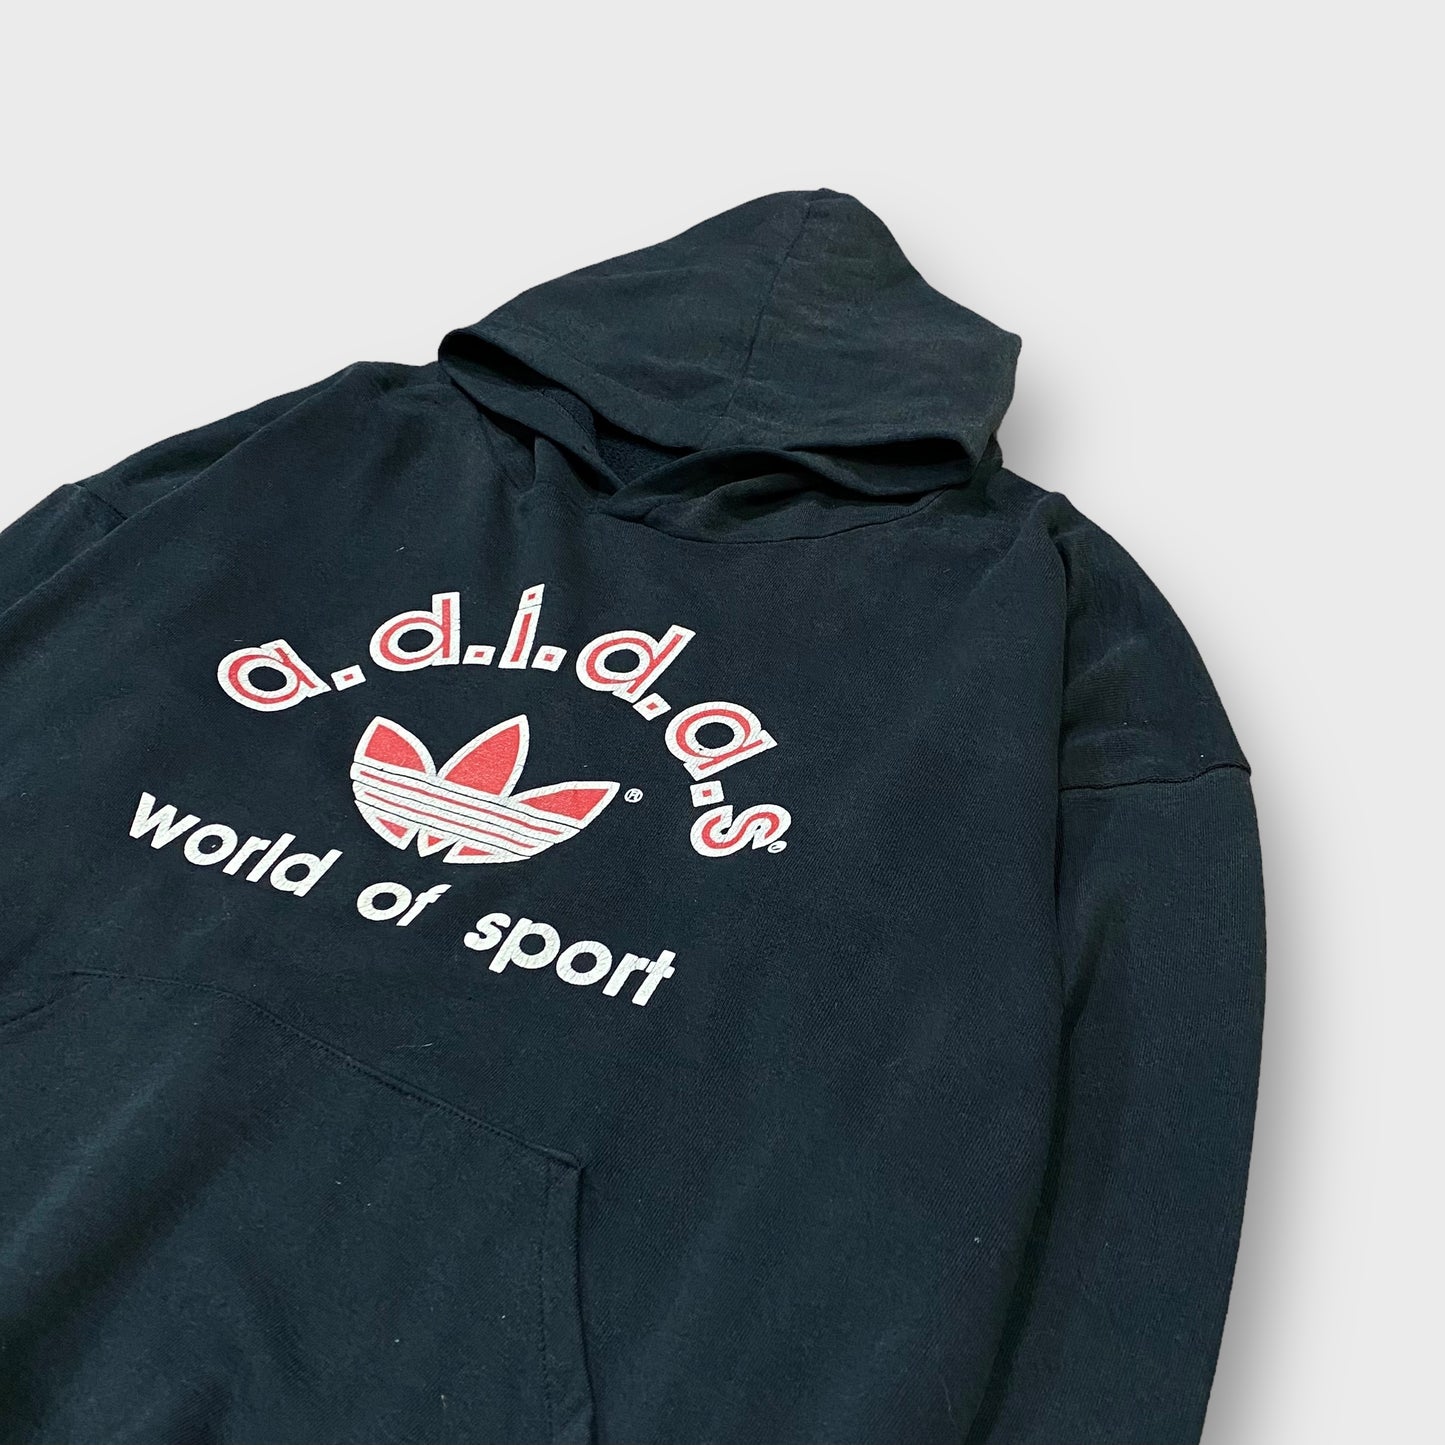 "adidas" Trefoil logo design hoodie